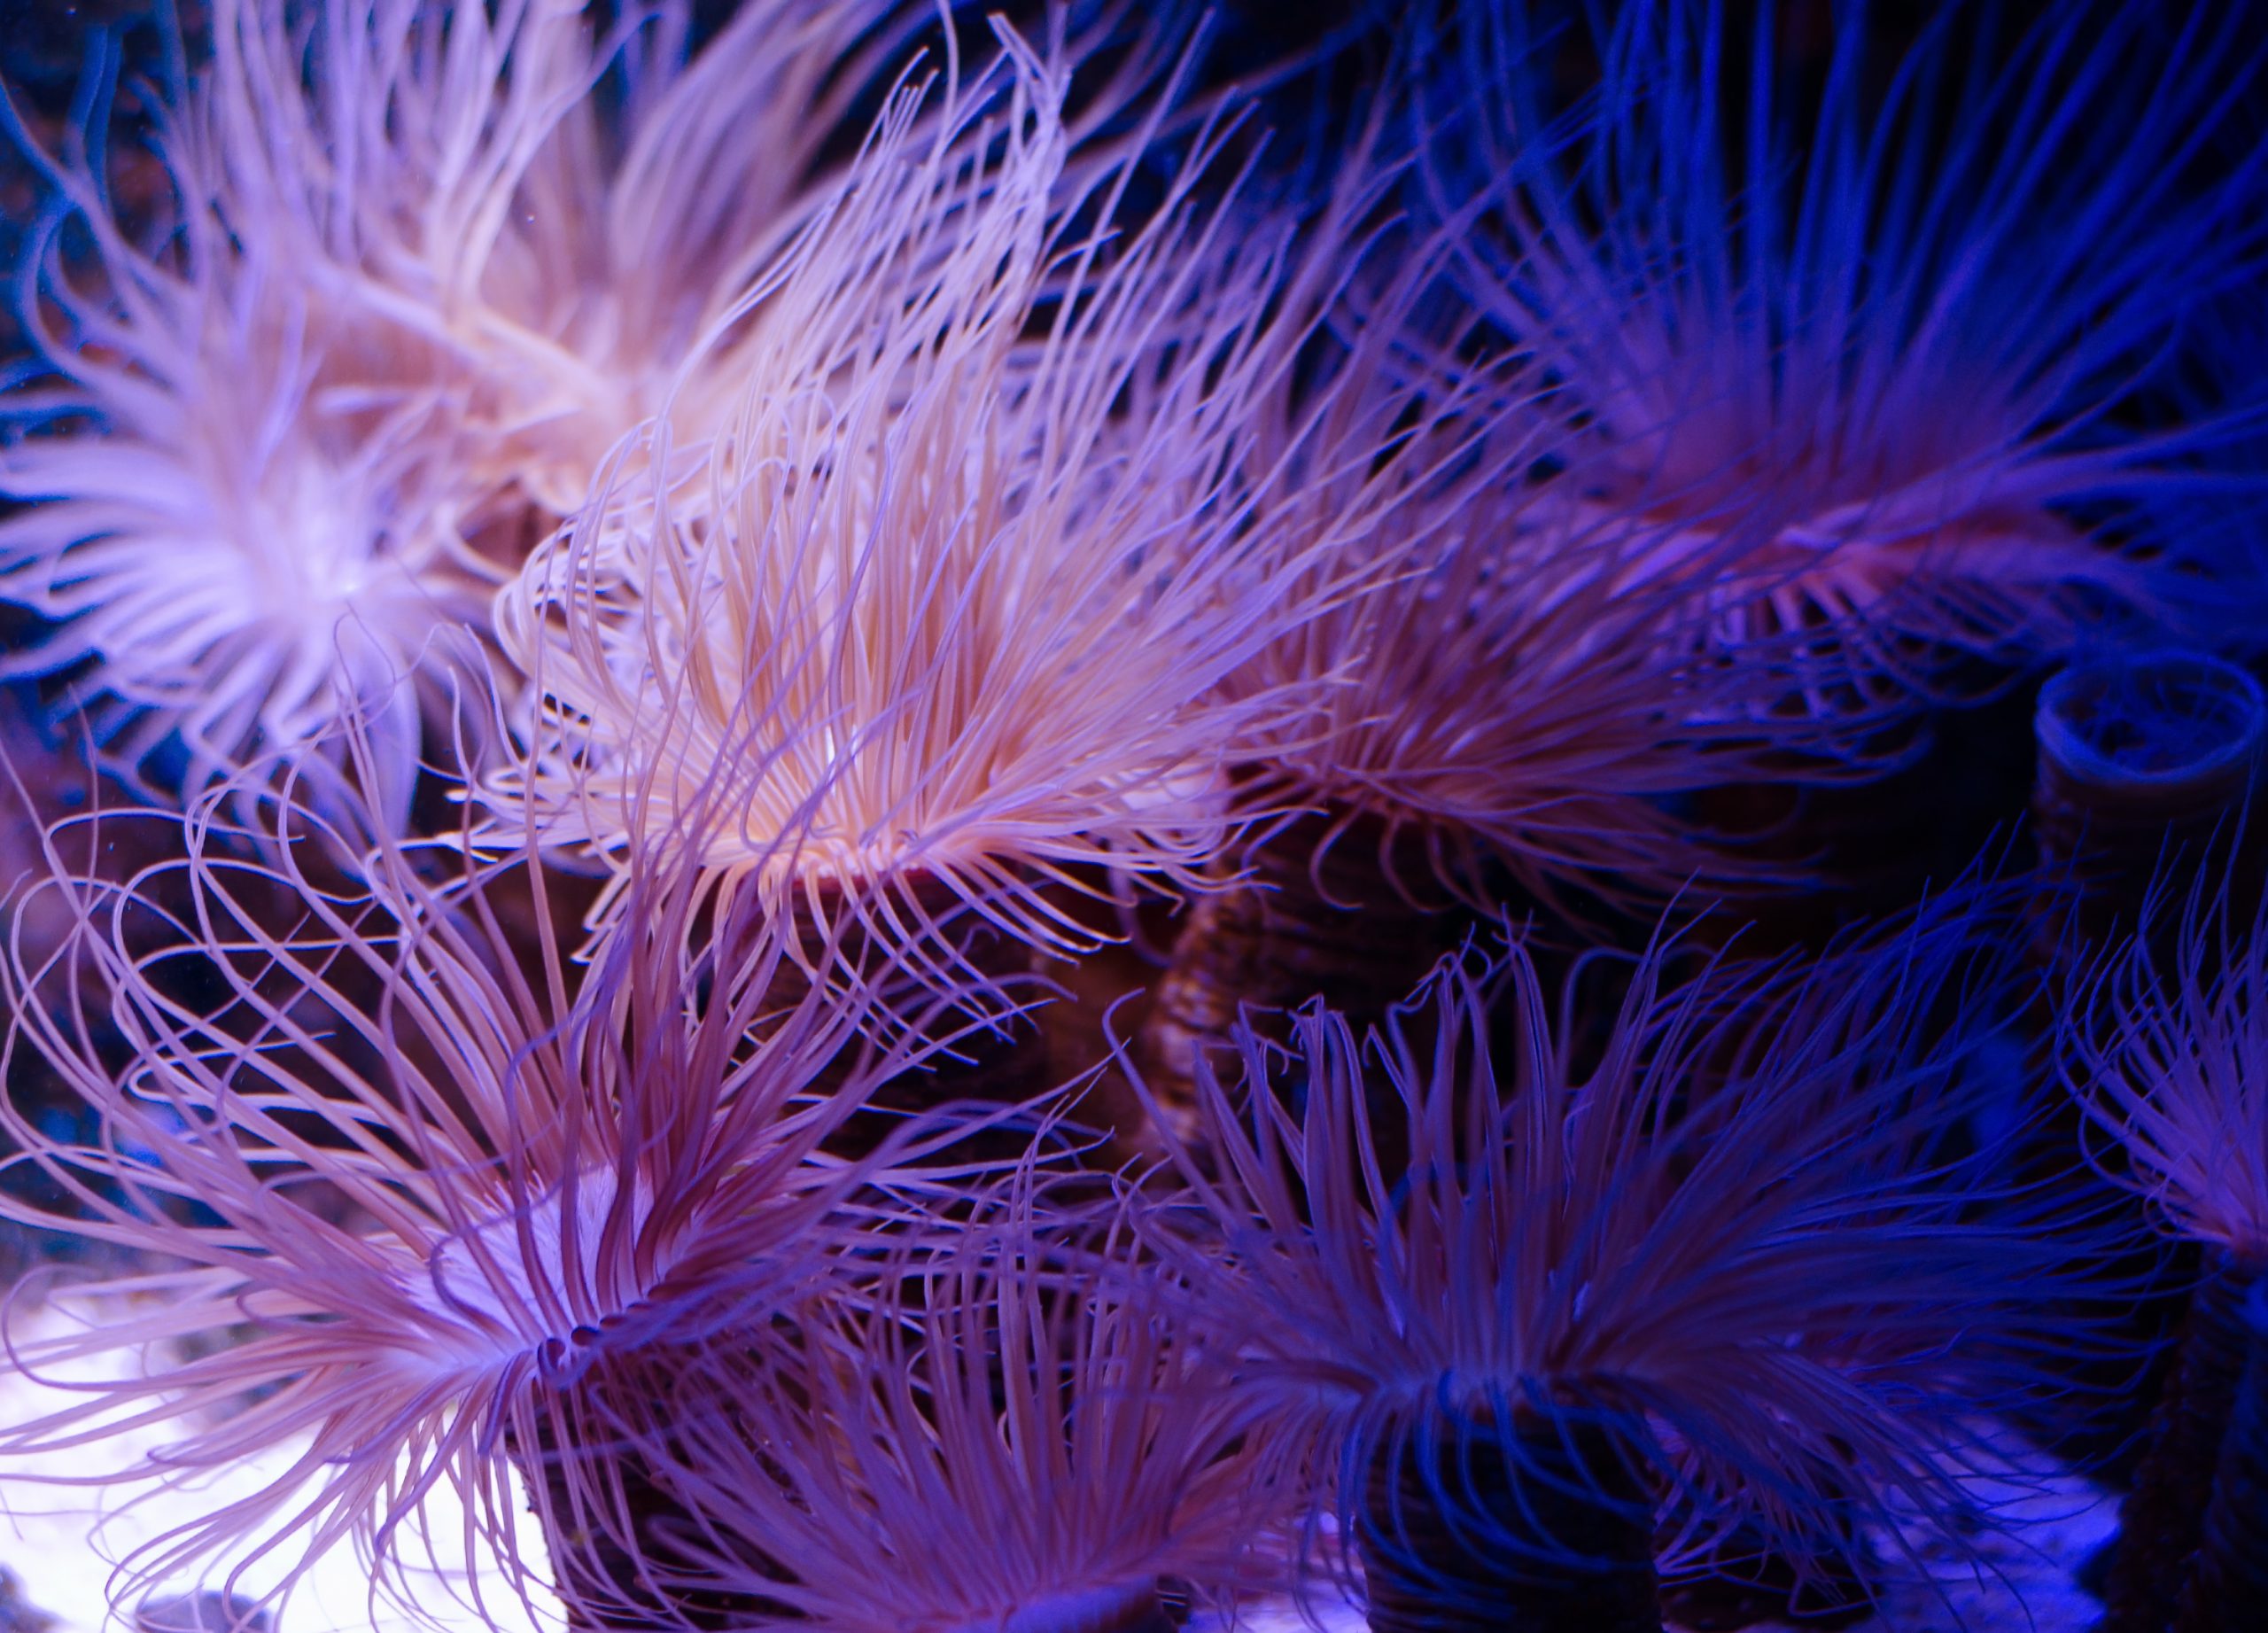 Sea anemone in a dark blue water of aquarium. Marine life background.